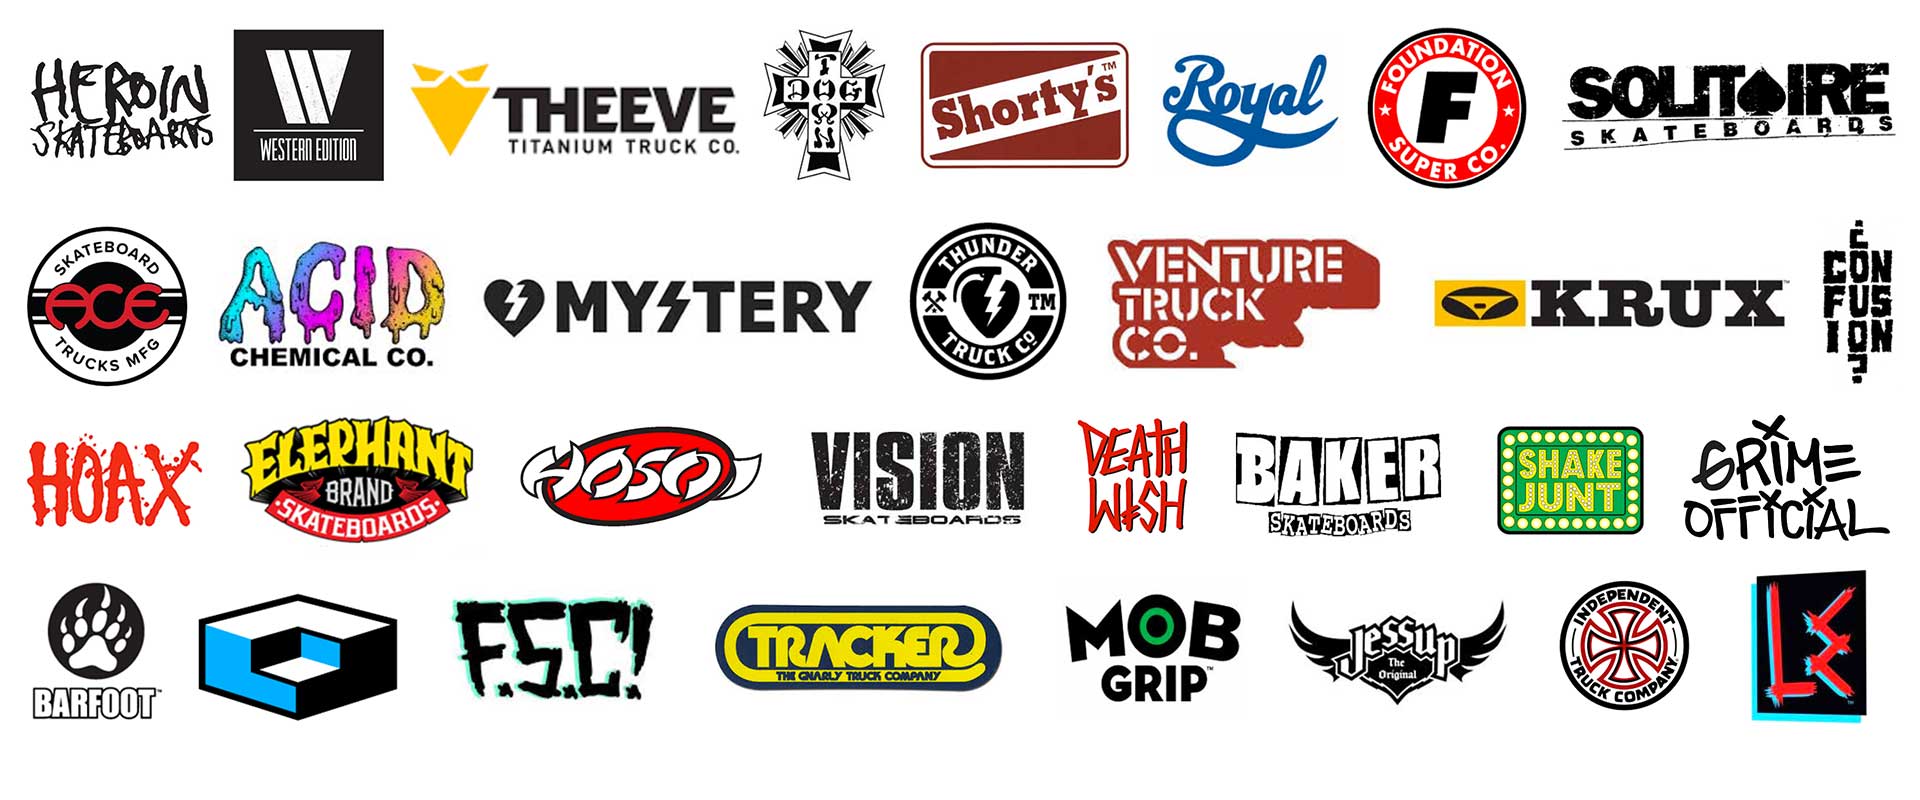 The Skateboard Logos That | vlr.eng.br